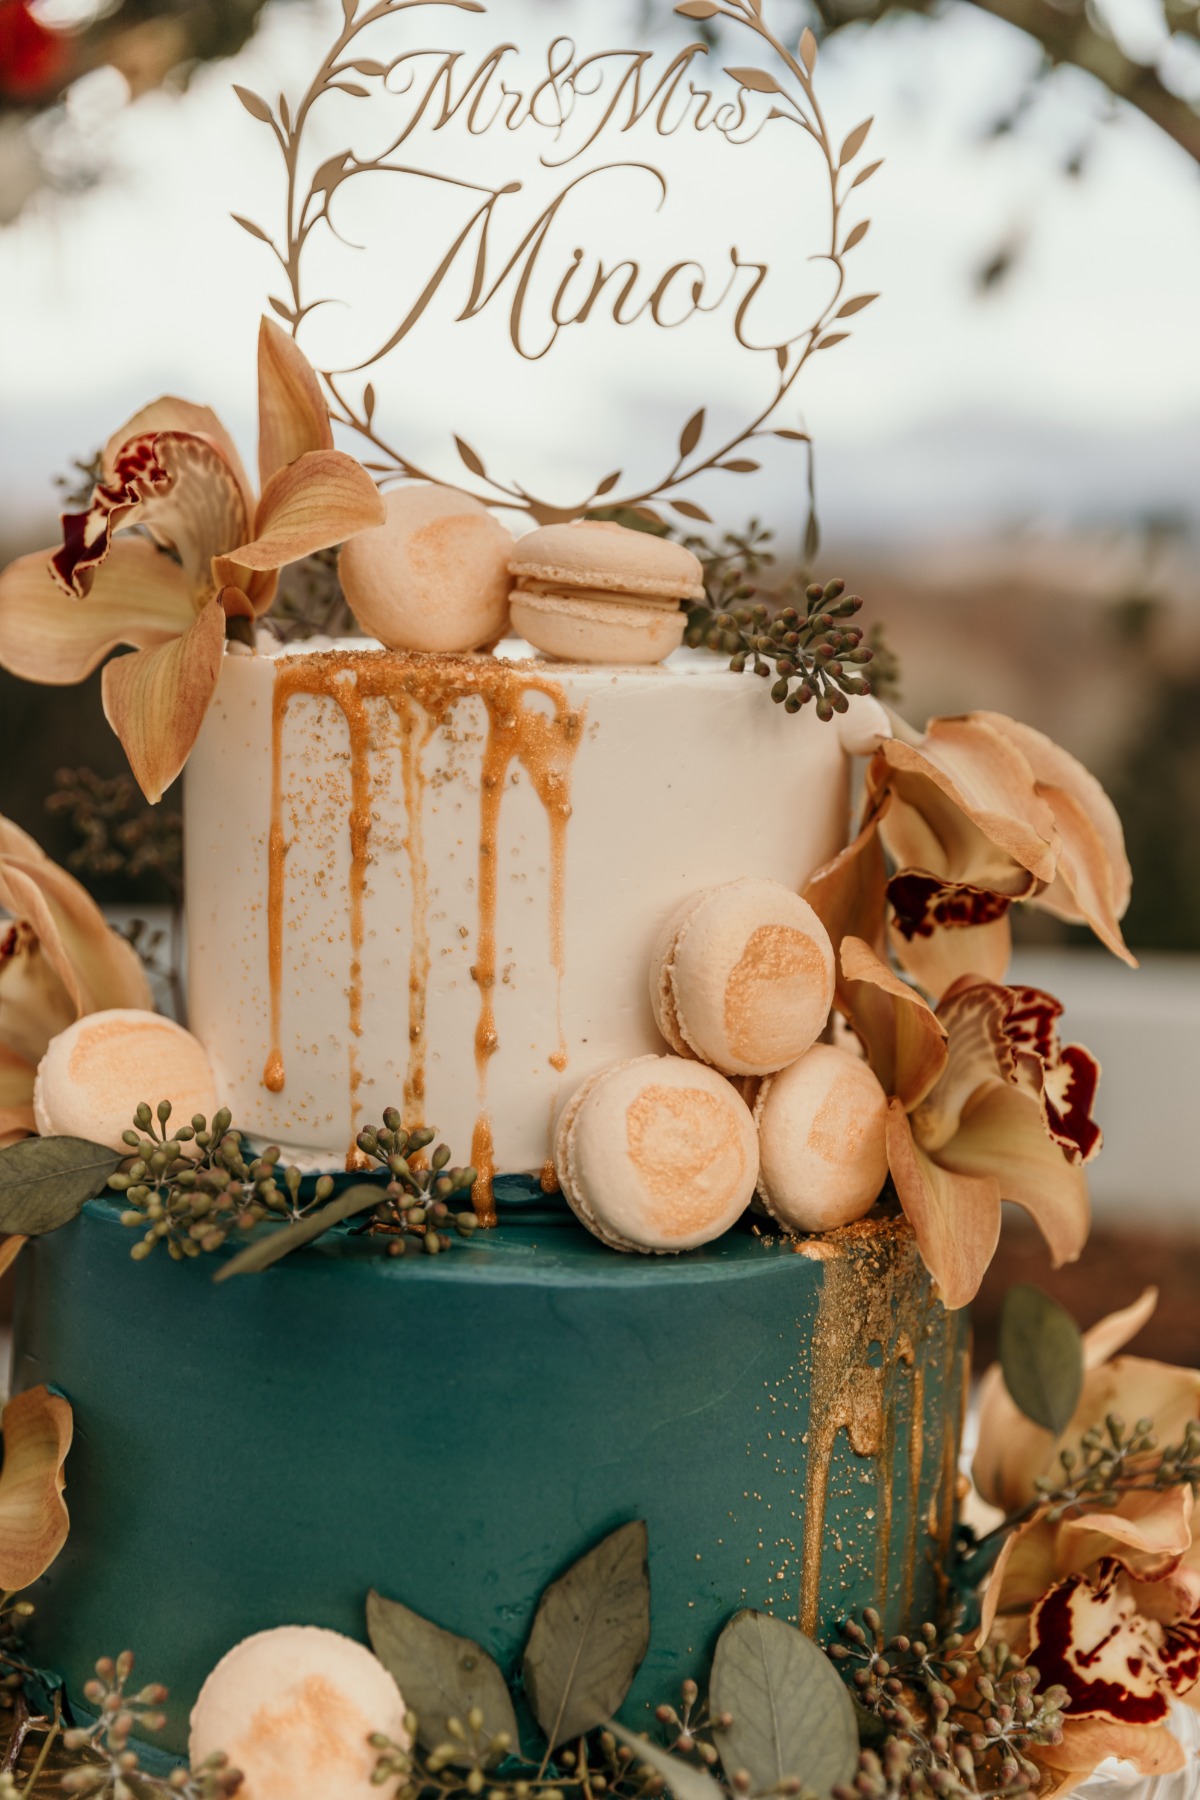 teal and white wedding cake with macarons